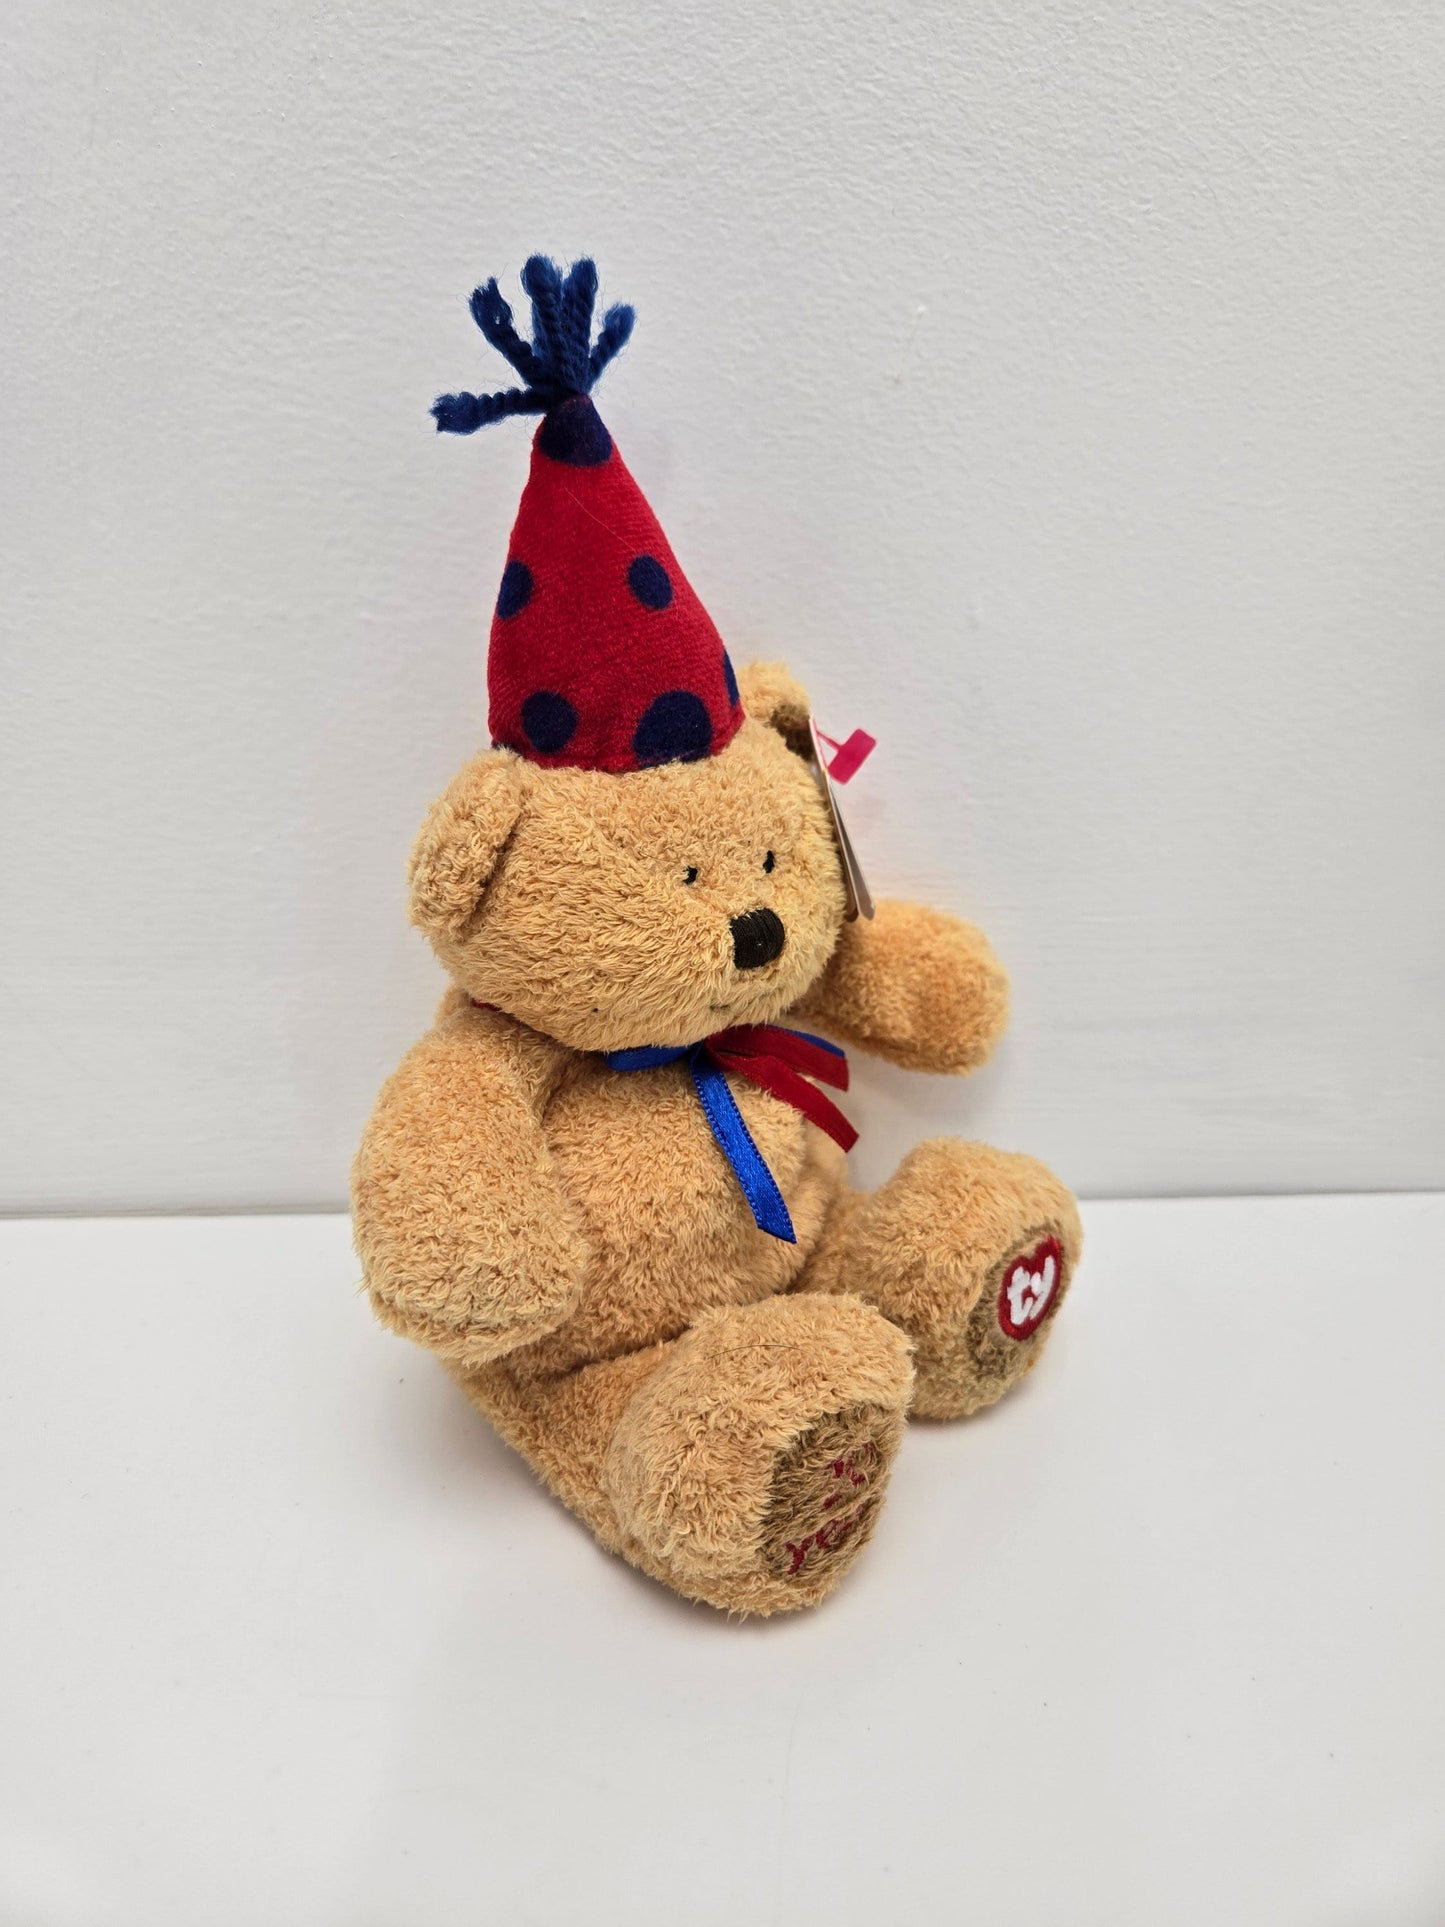 Ty Beanie Baby “Fun” the Birthday Bear (5.5 inch)